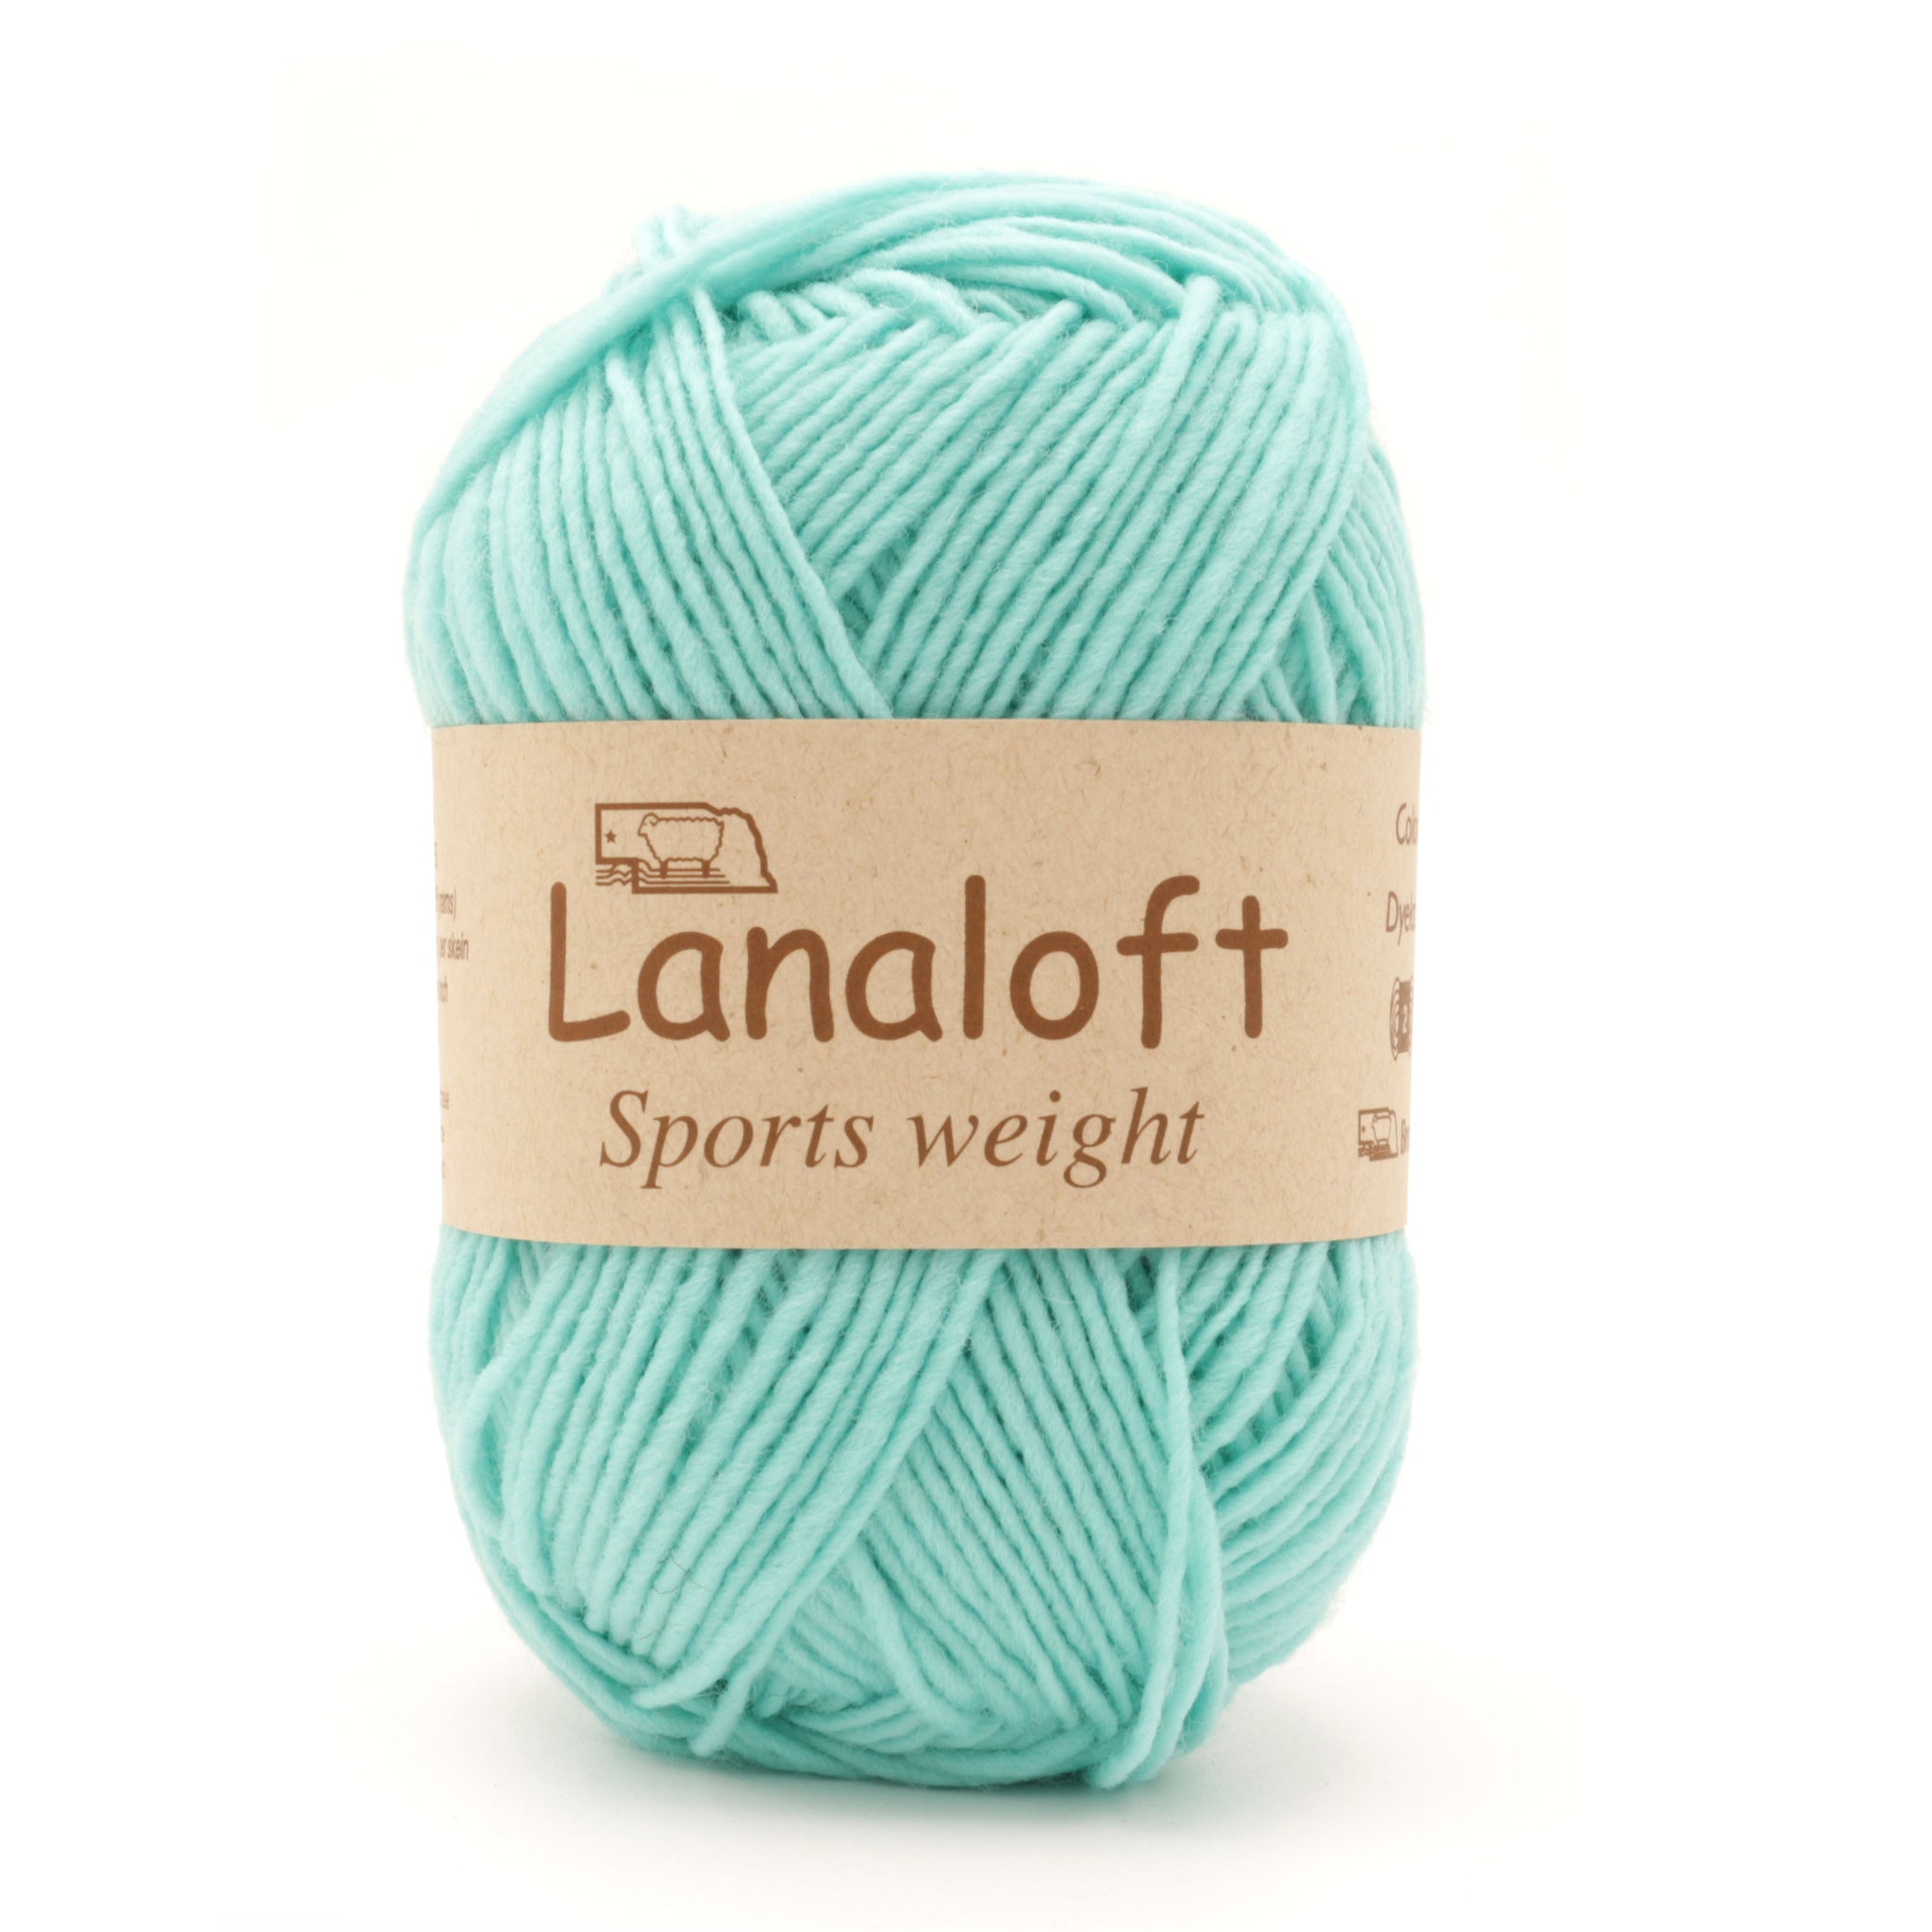 Lanaloft Worsted Weight Yarn | 160 Yards | 100% Wool Lavender Cloud - 1LL59P